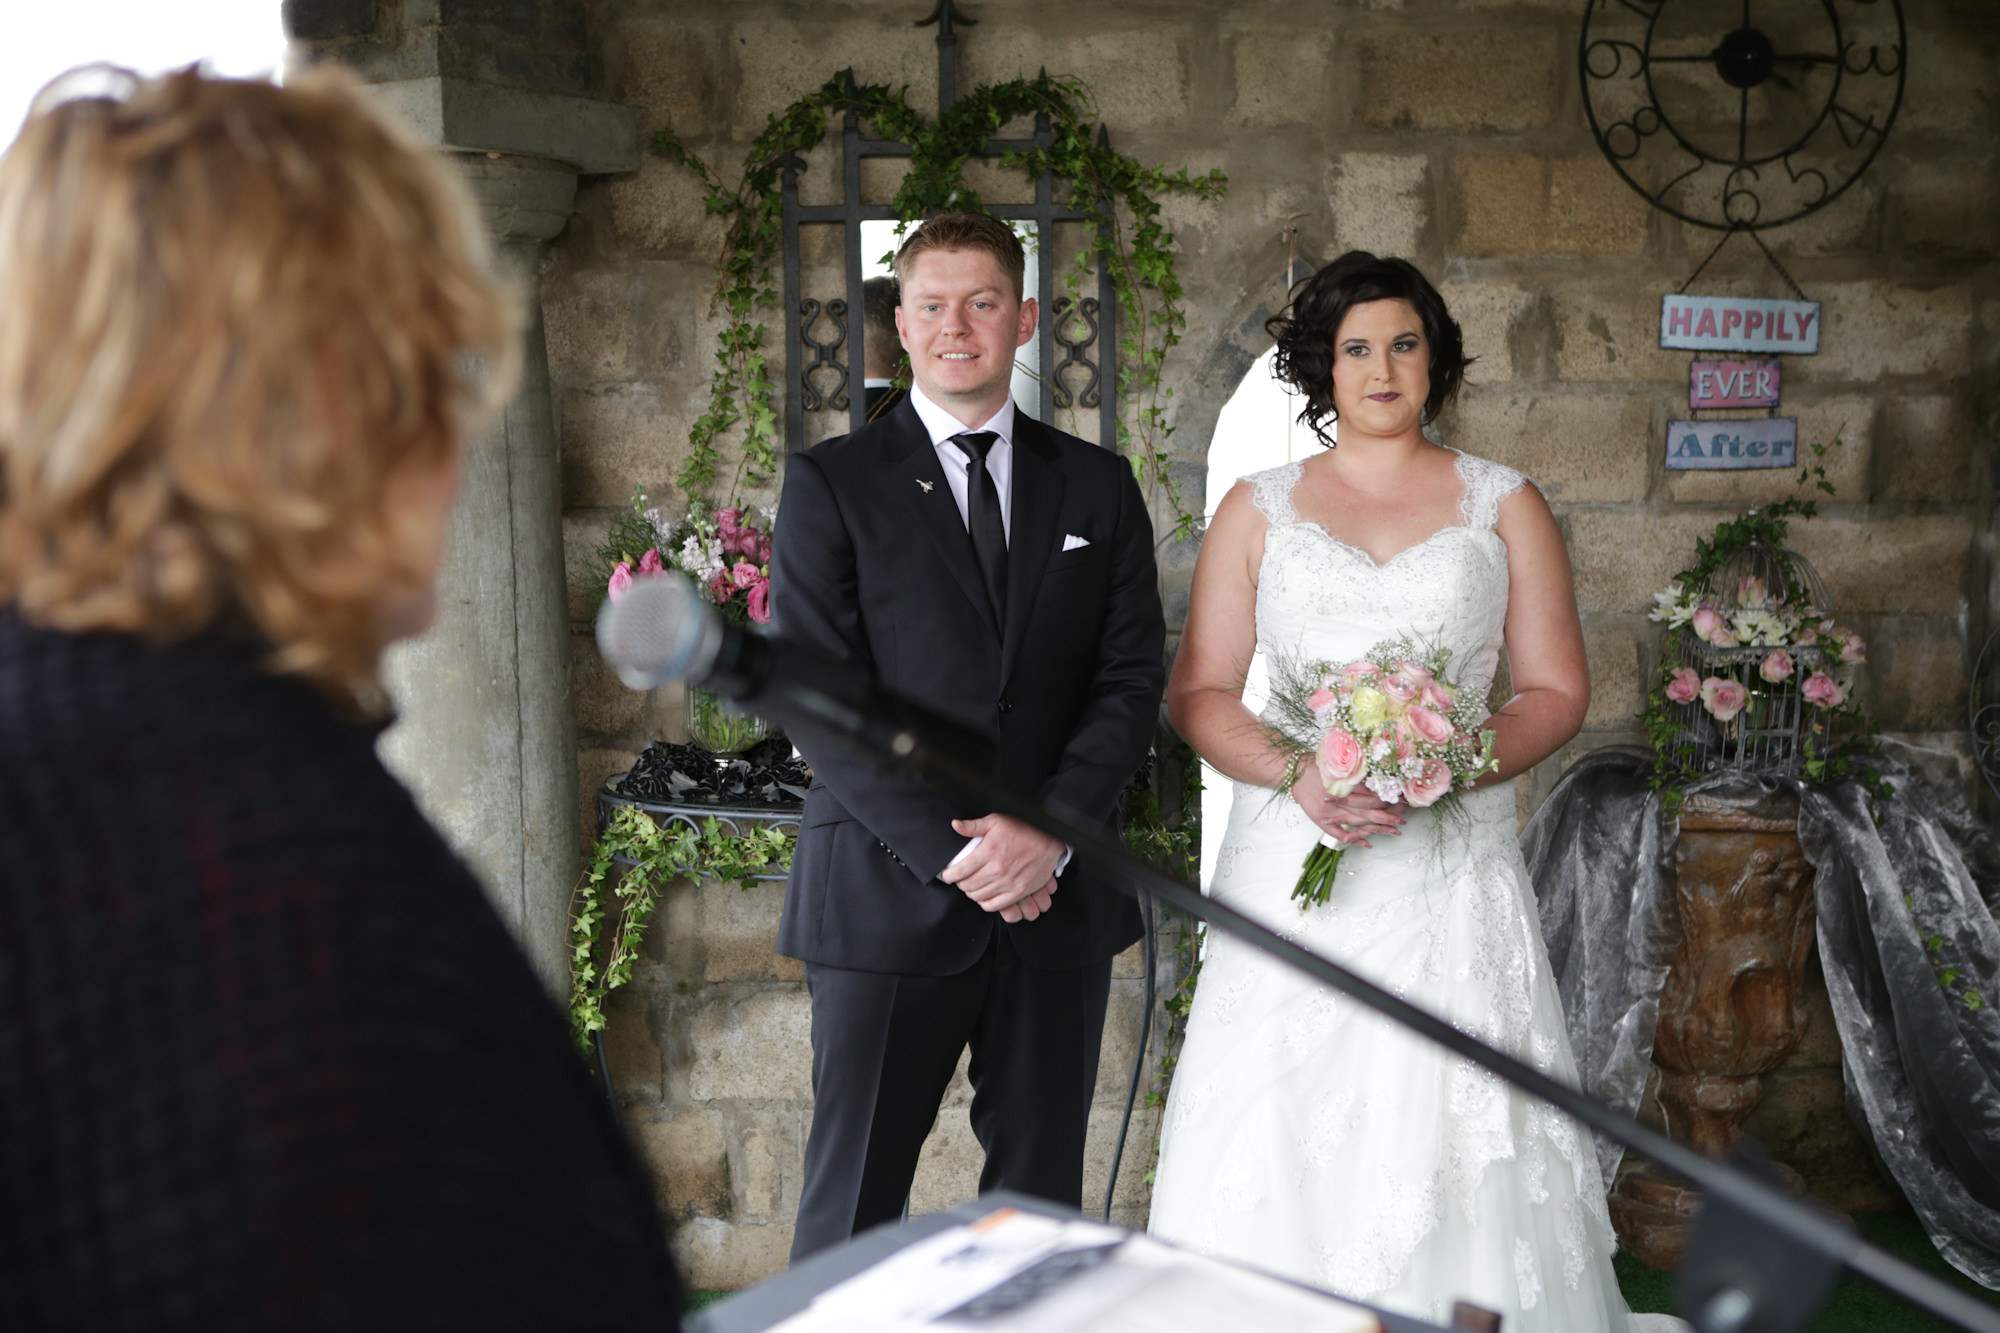 Wedding at Bygracealone - Wedding photographer George (49)